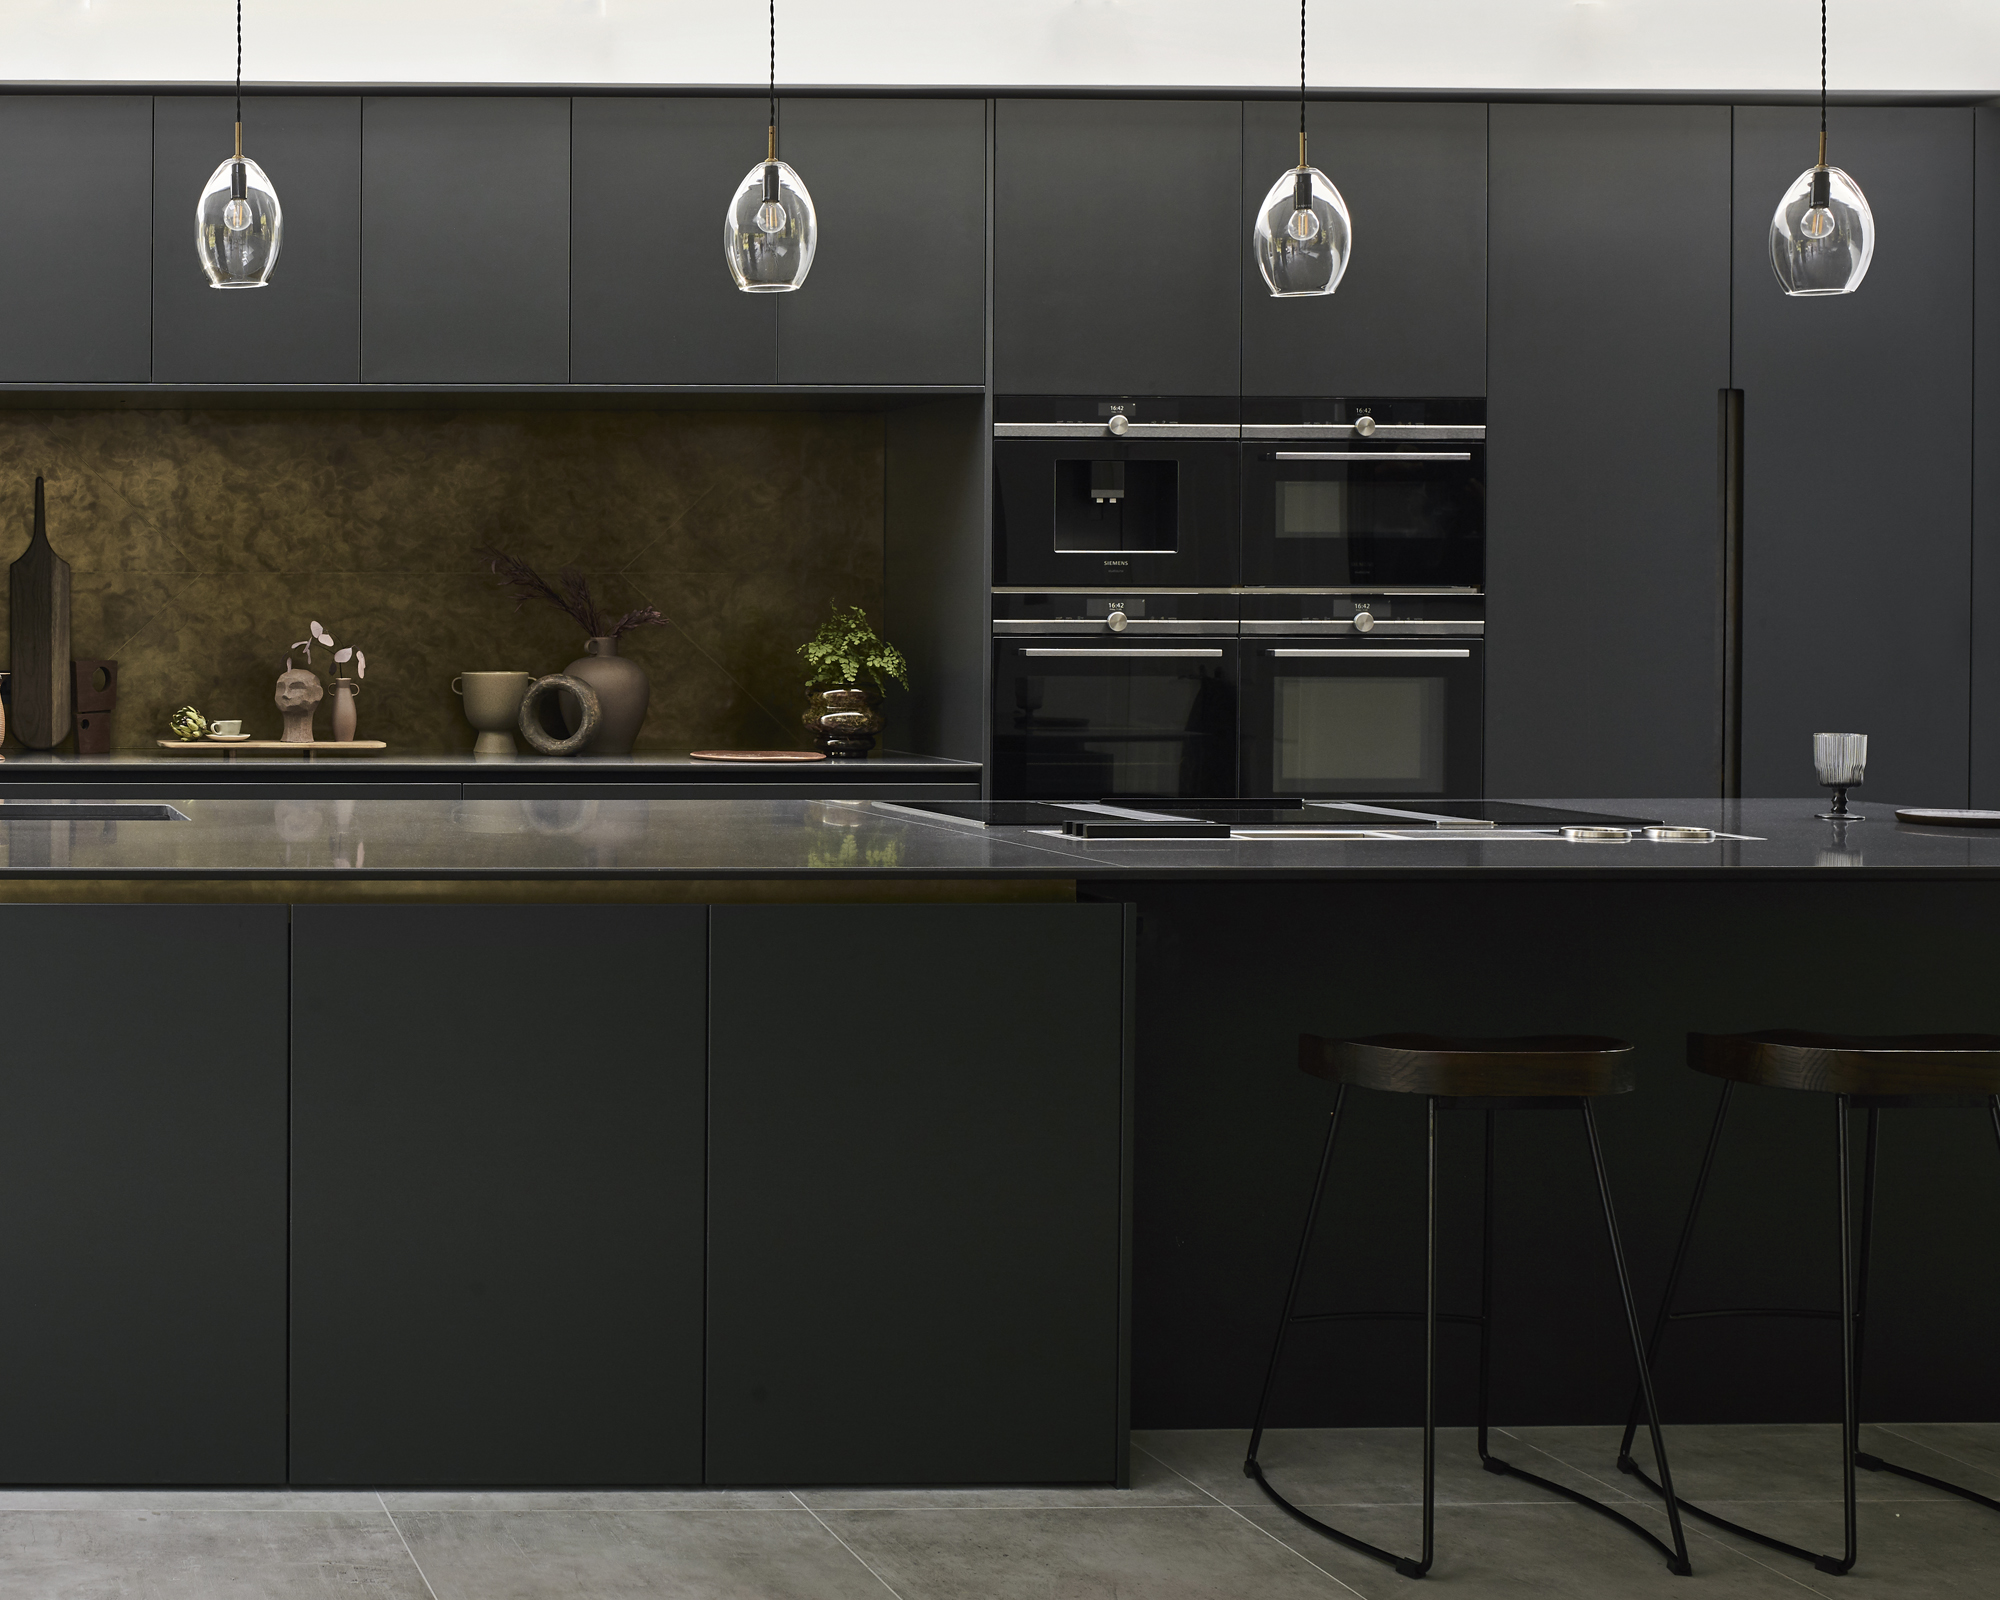 A black kitchen idea with matte black cabinets, stone worktop on the island, brass backsplash and pendant lights